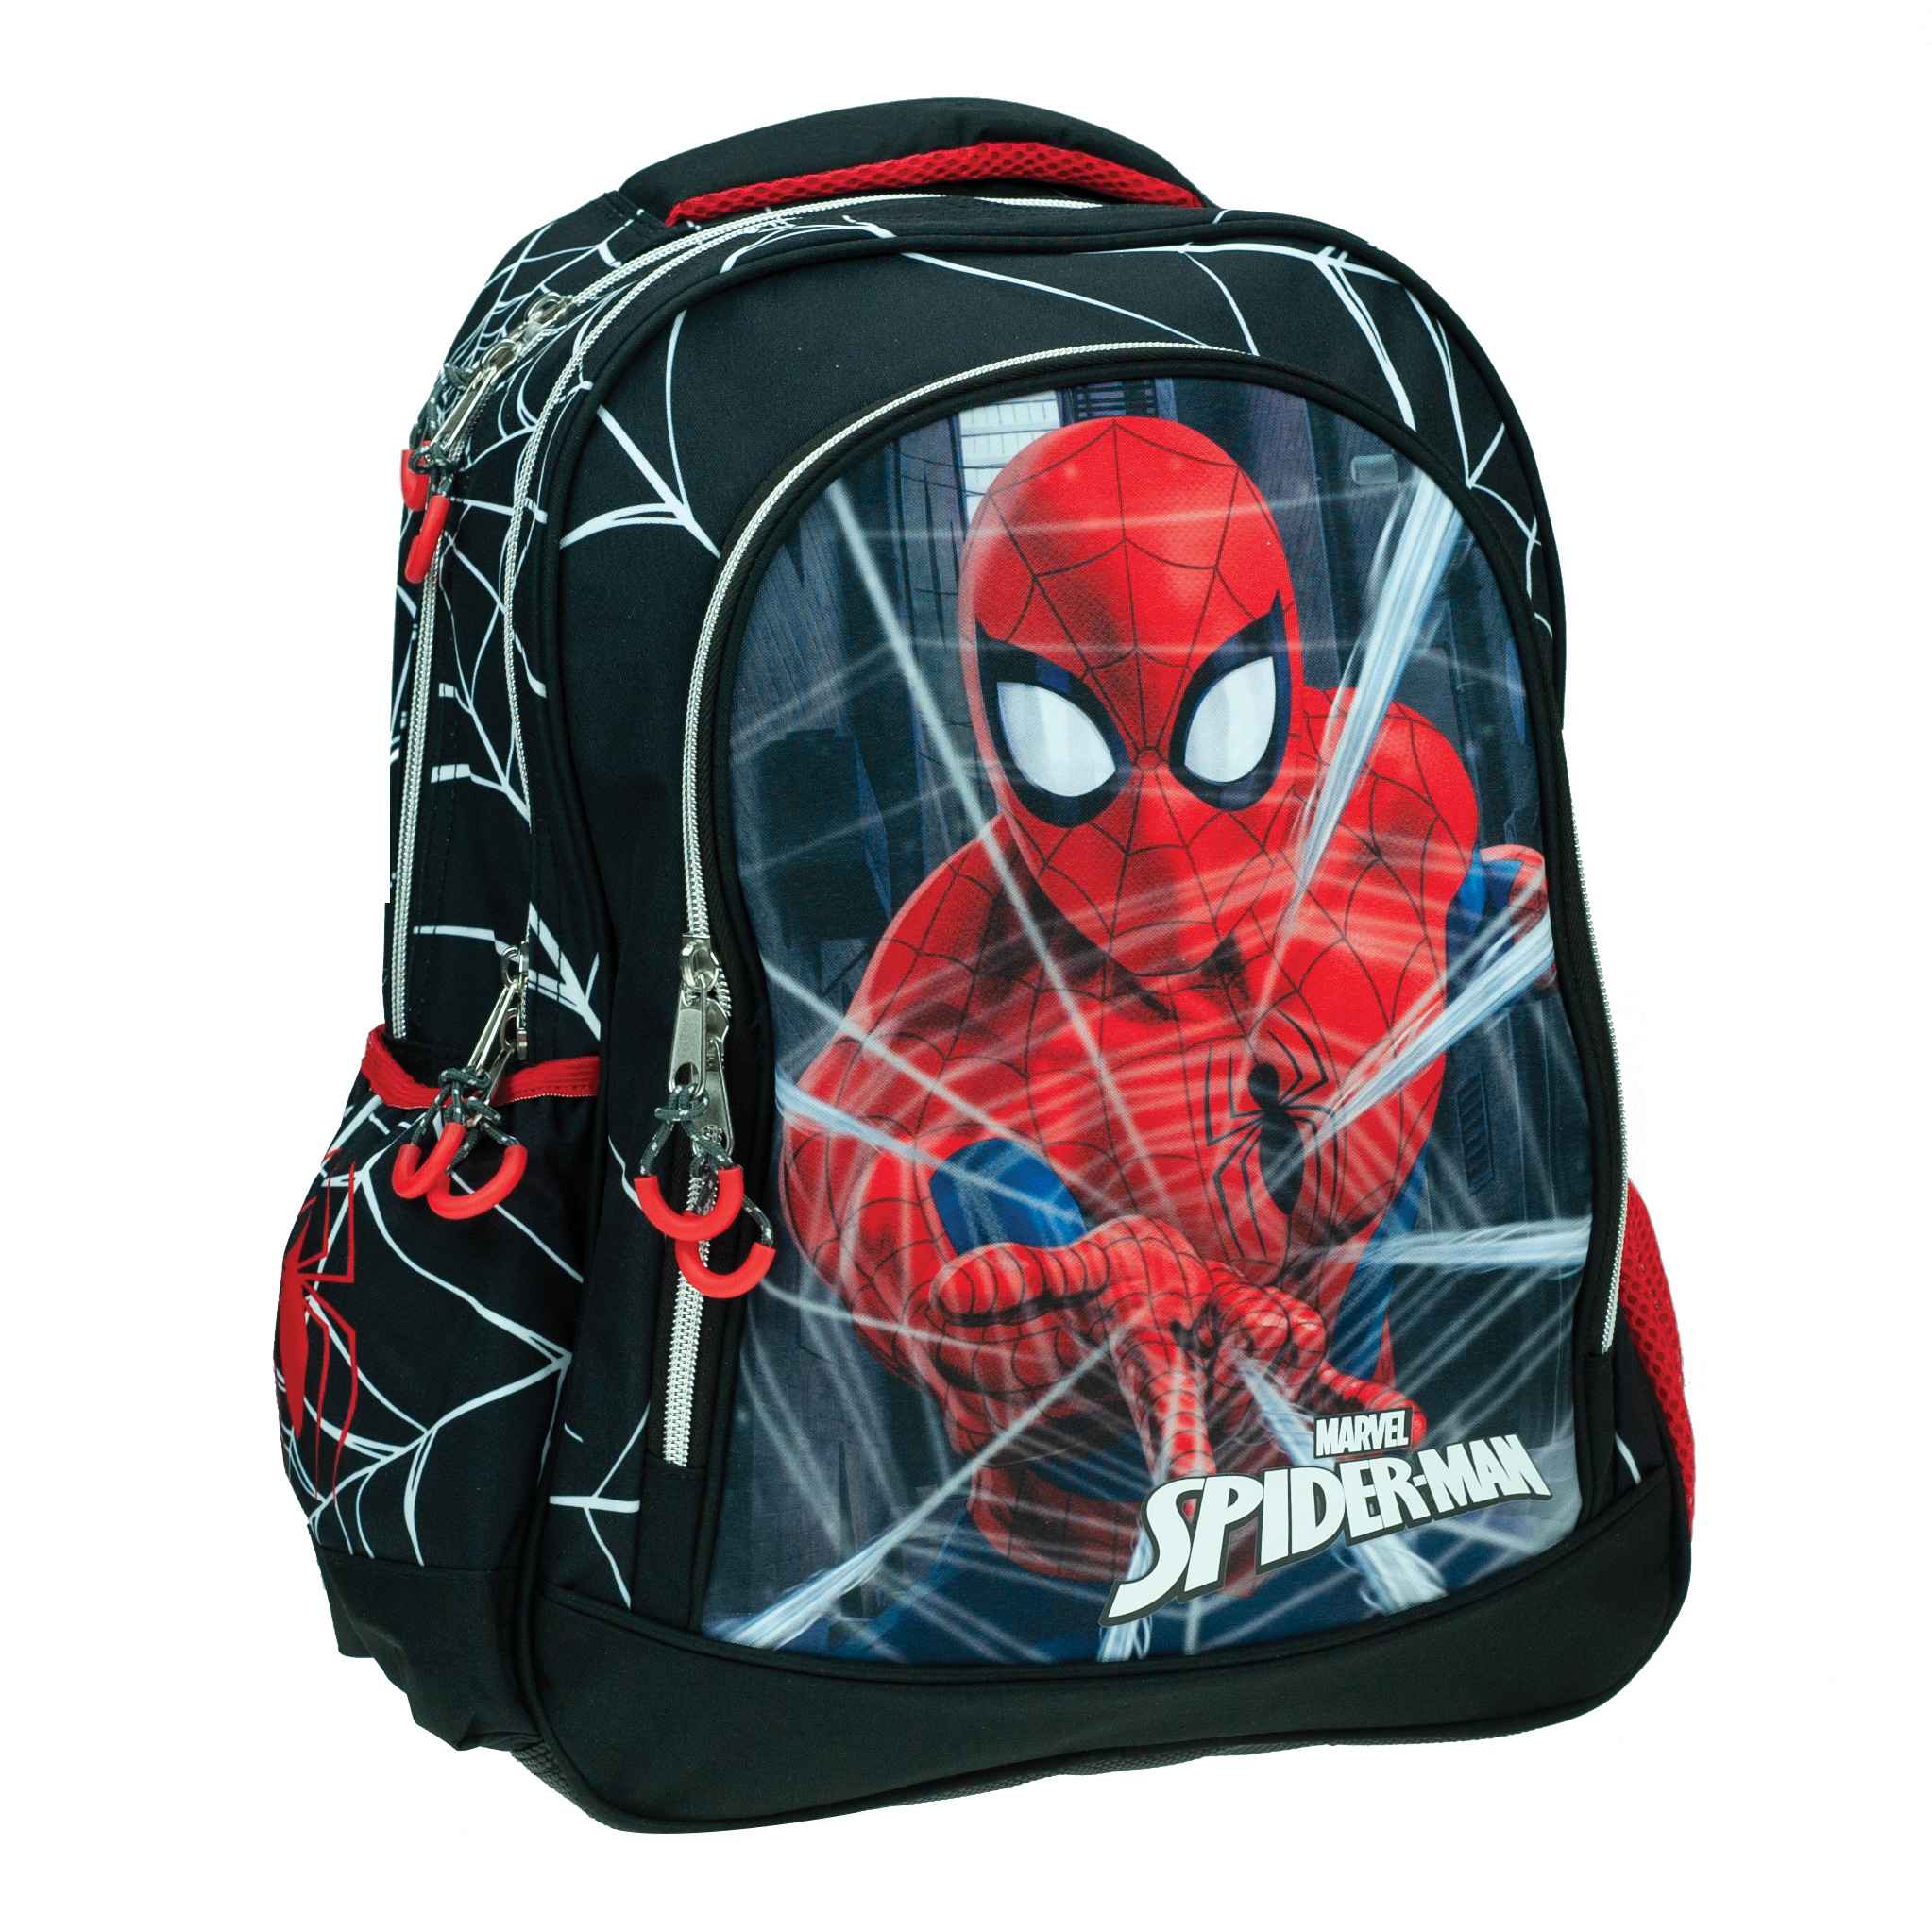 Gim Τσάντα Δημοτικού Πλάτης Οβάλ Spiderman Black City 337-05031 - Gim